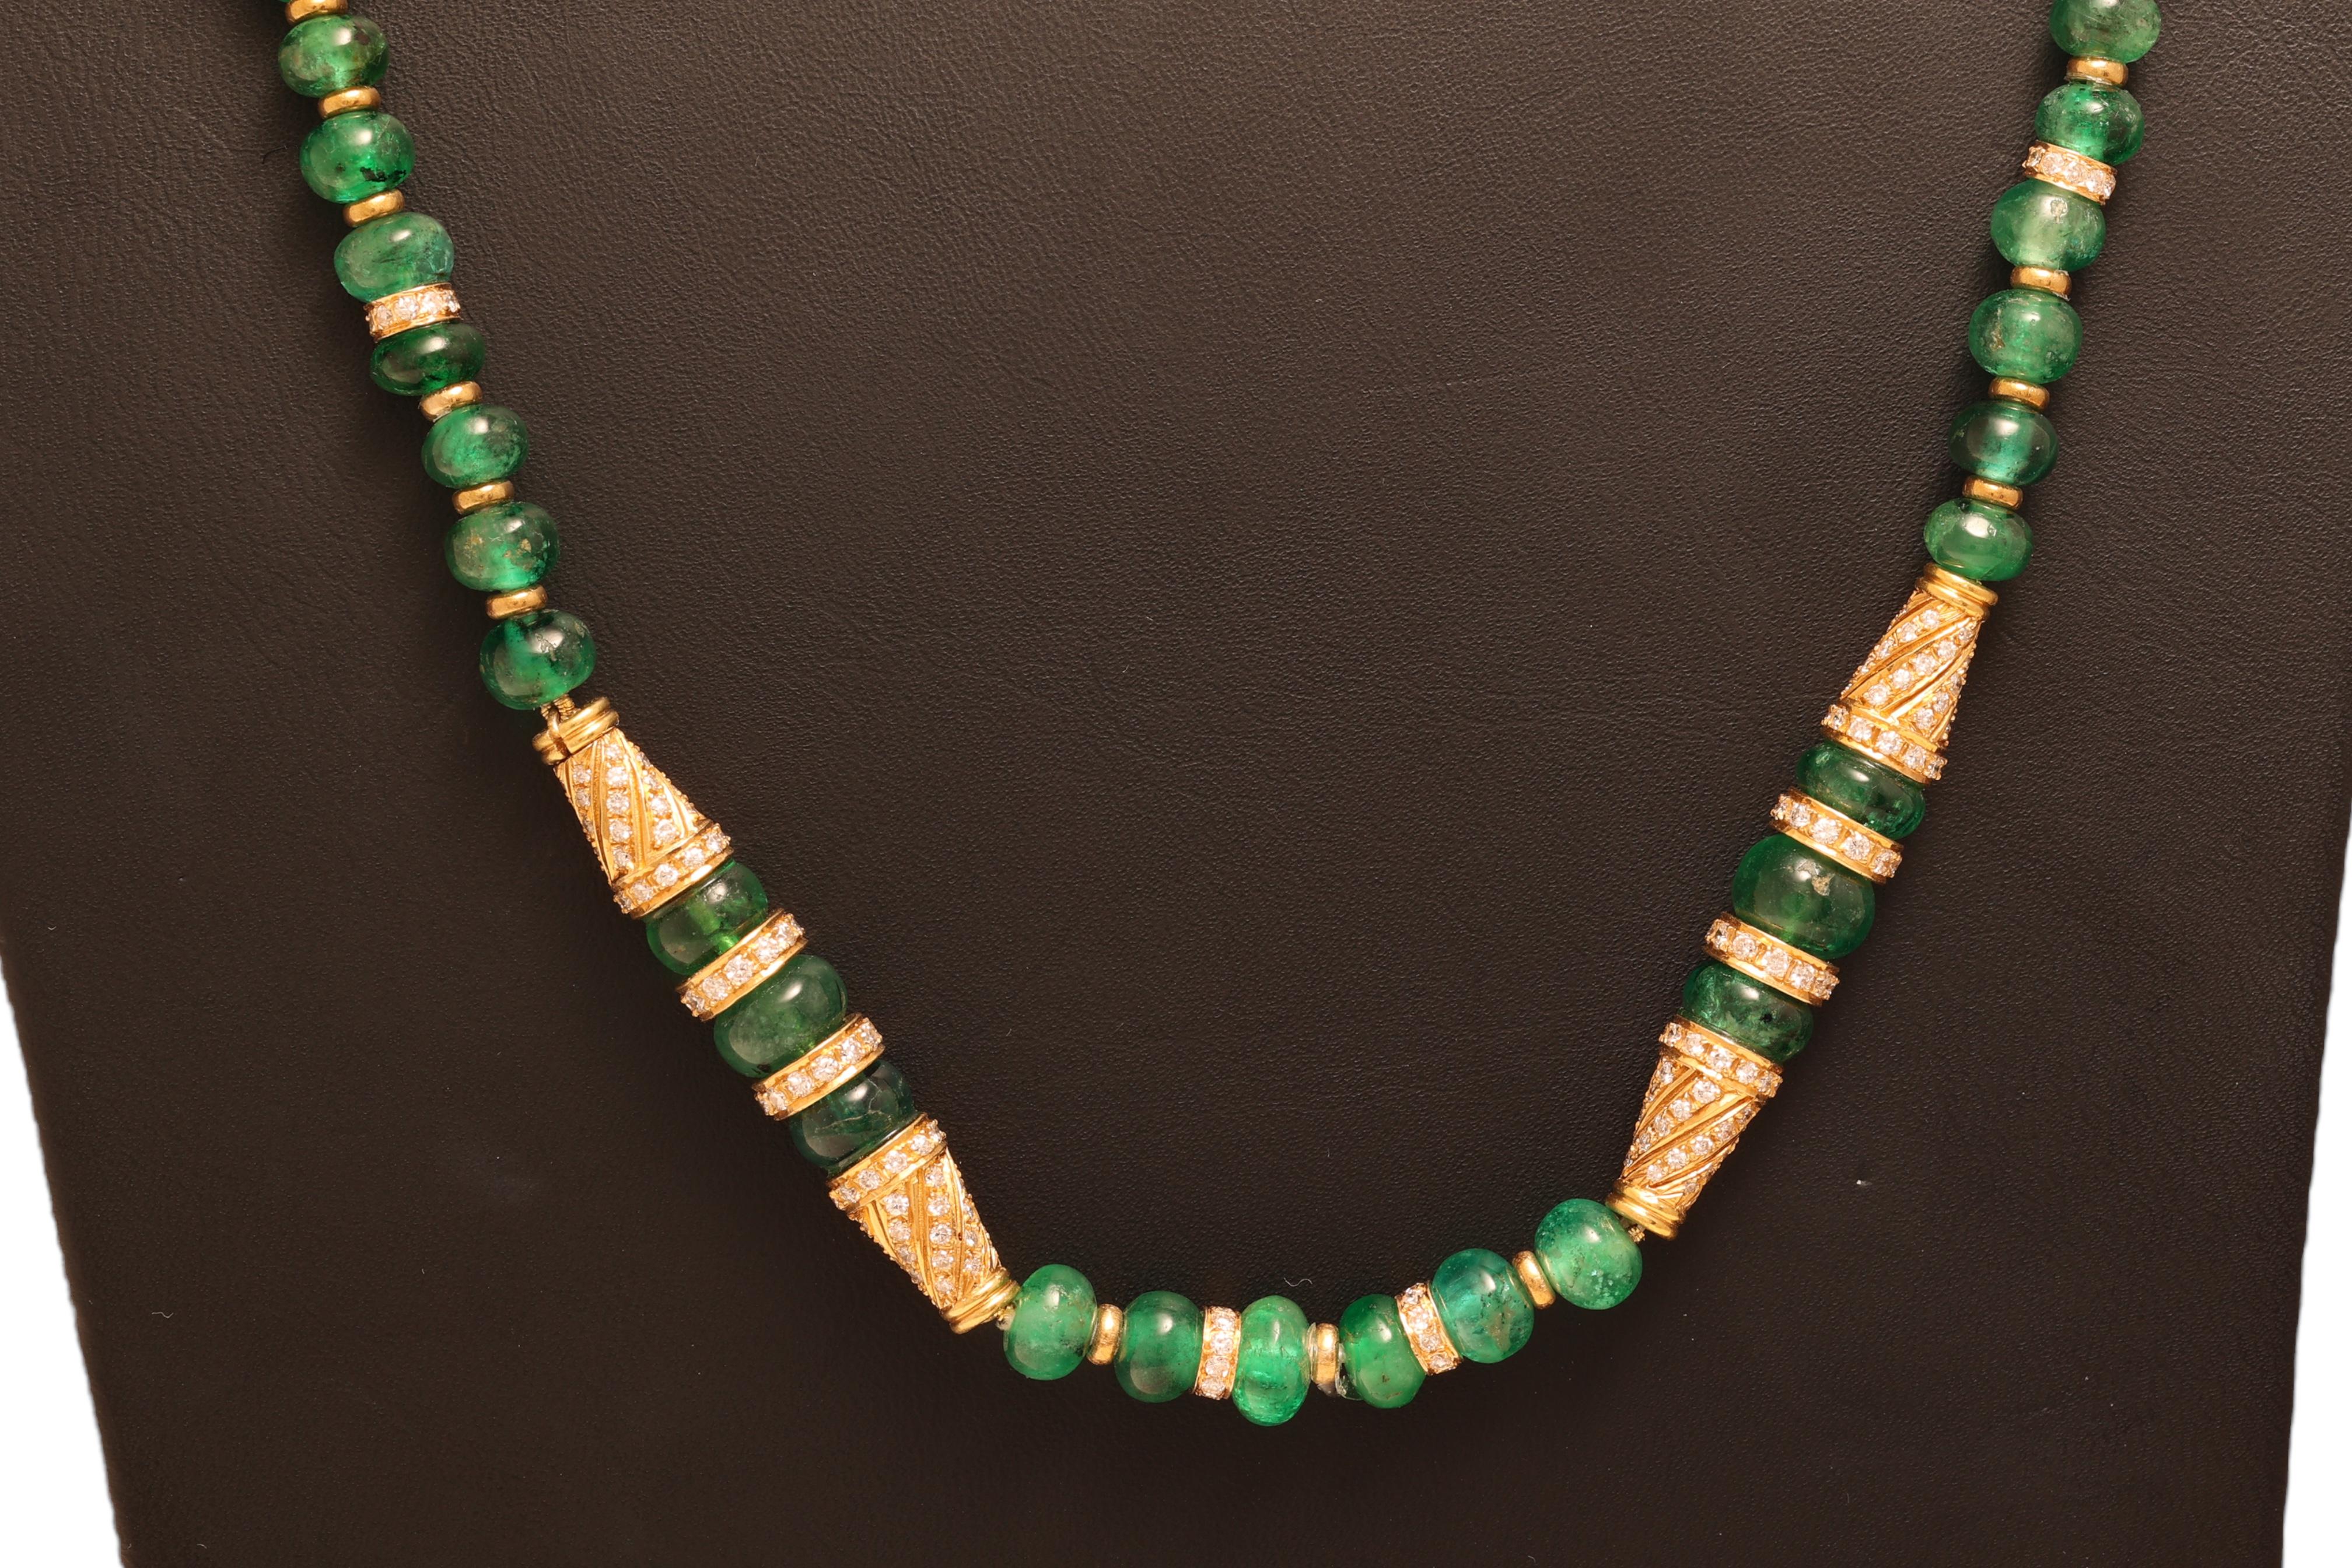 Adler Genèva 18kt Gold Necklaces 480ct Faceted Bead Emeralds CGL Certified For Sale 8